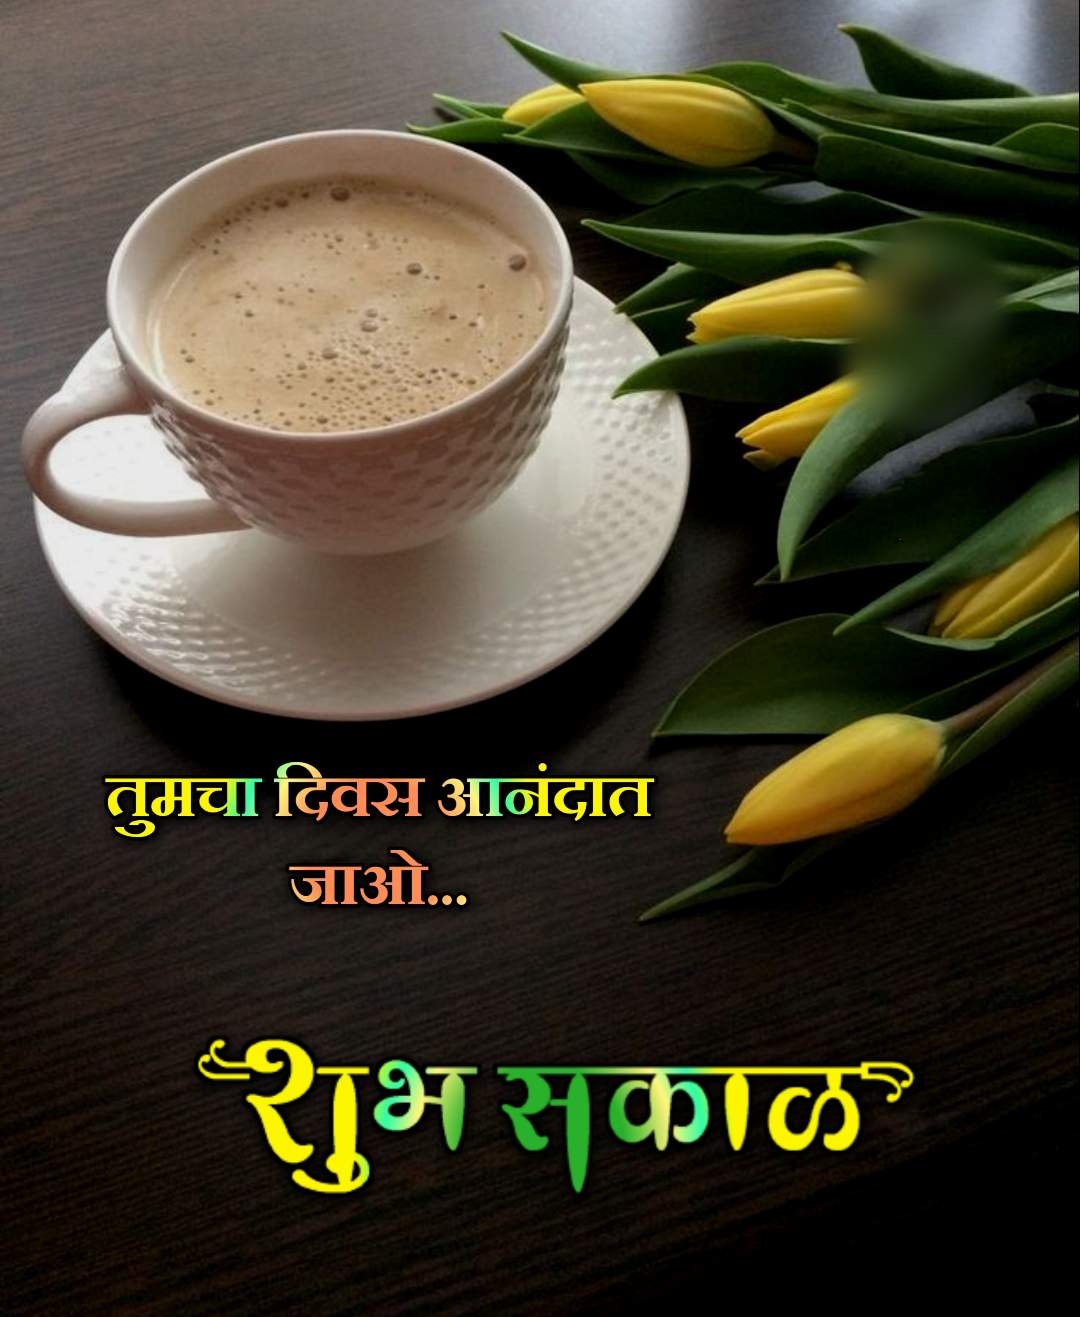 शुभ सकाळ चहा Shubh Sakal Chaha (3)